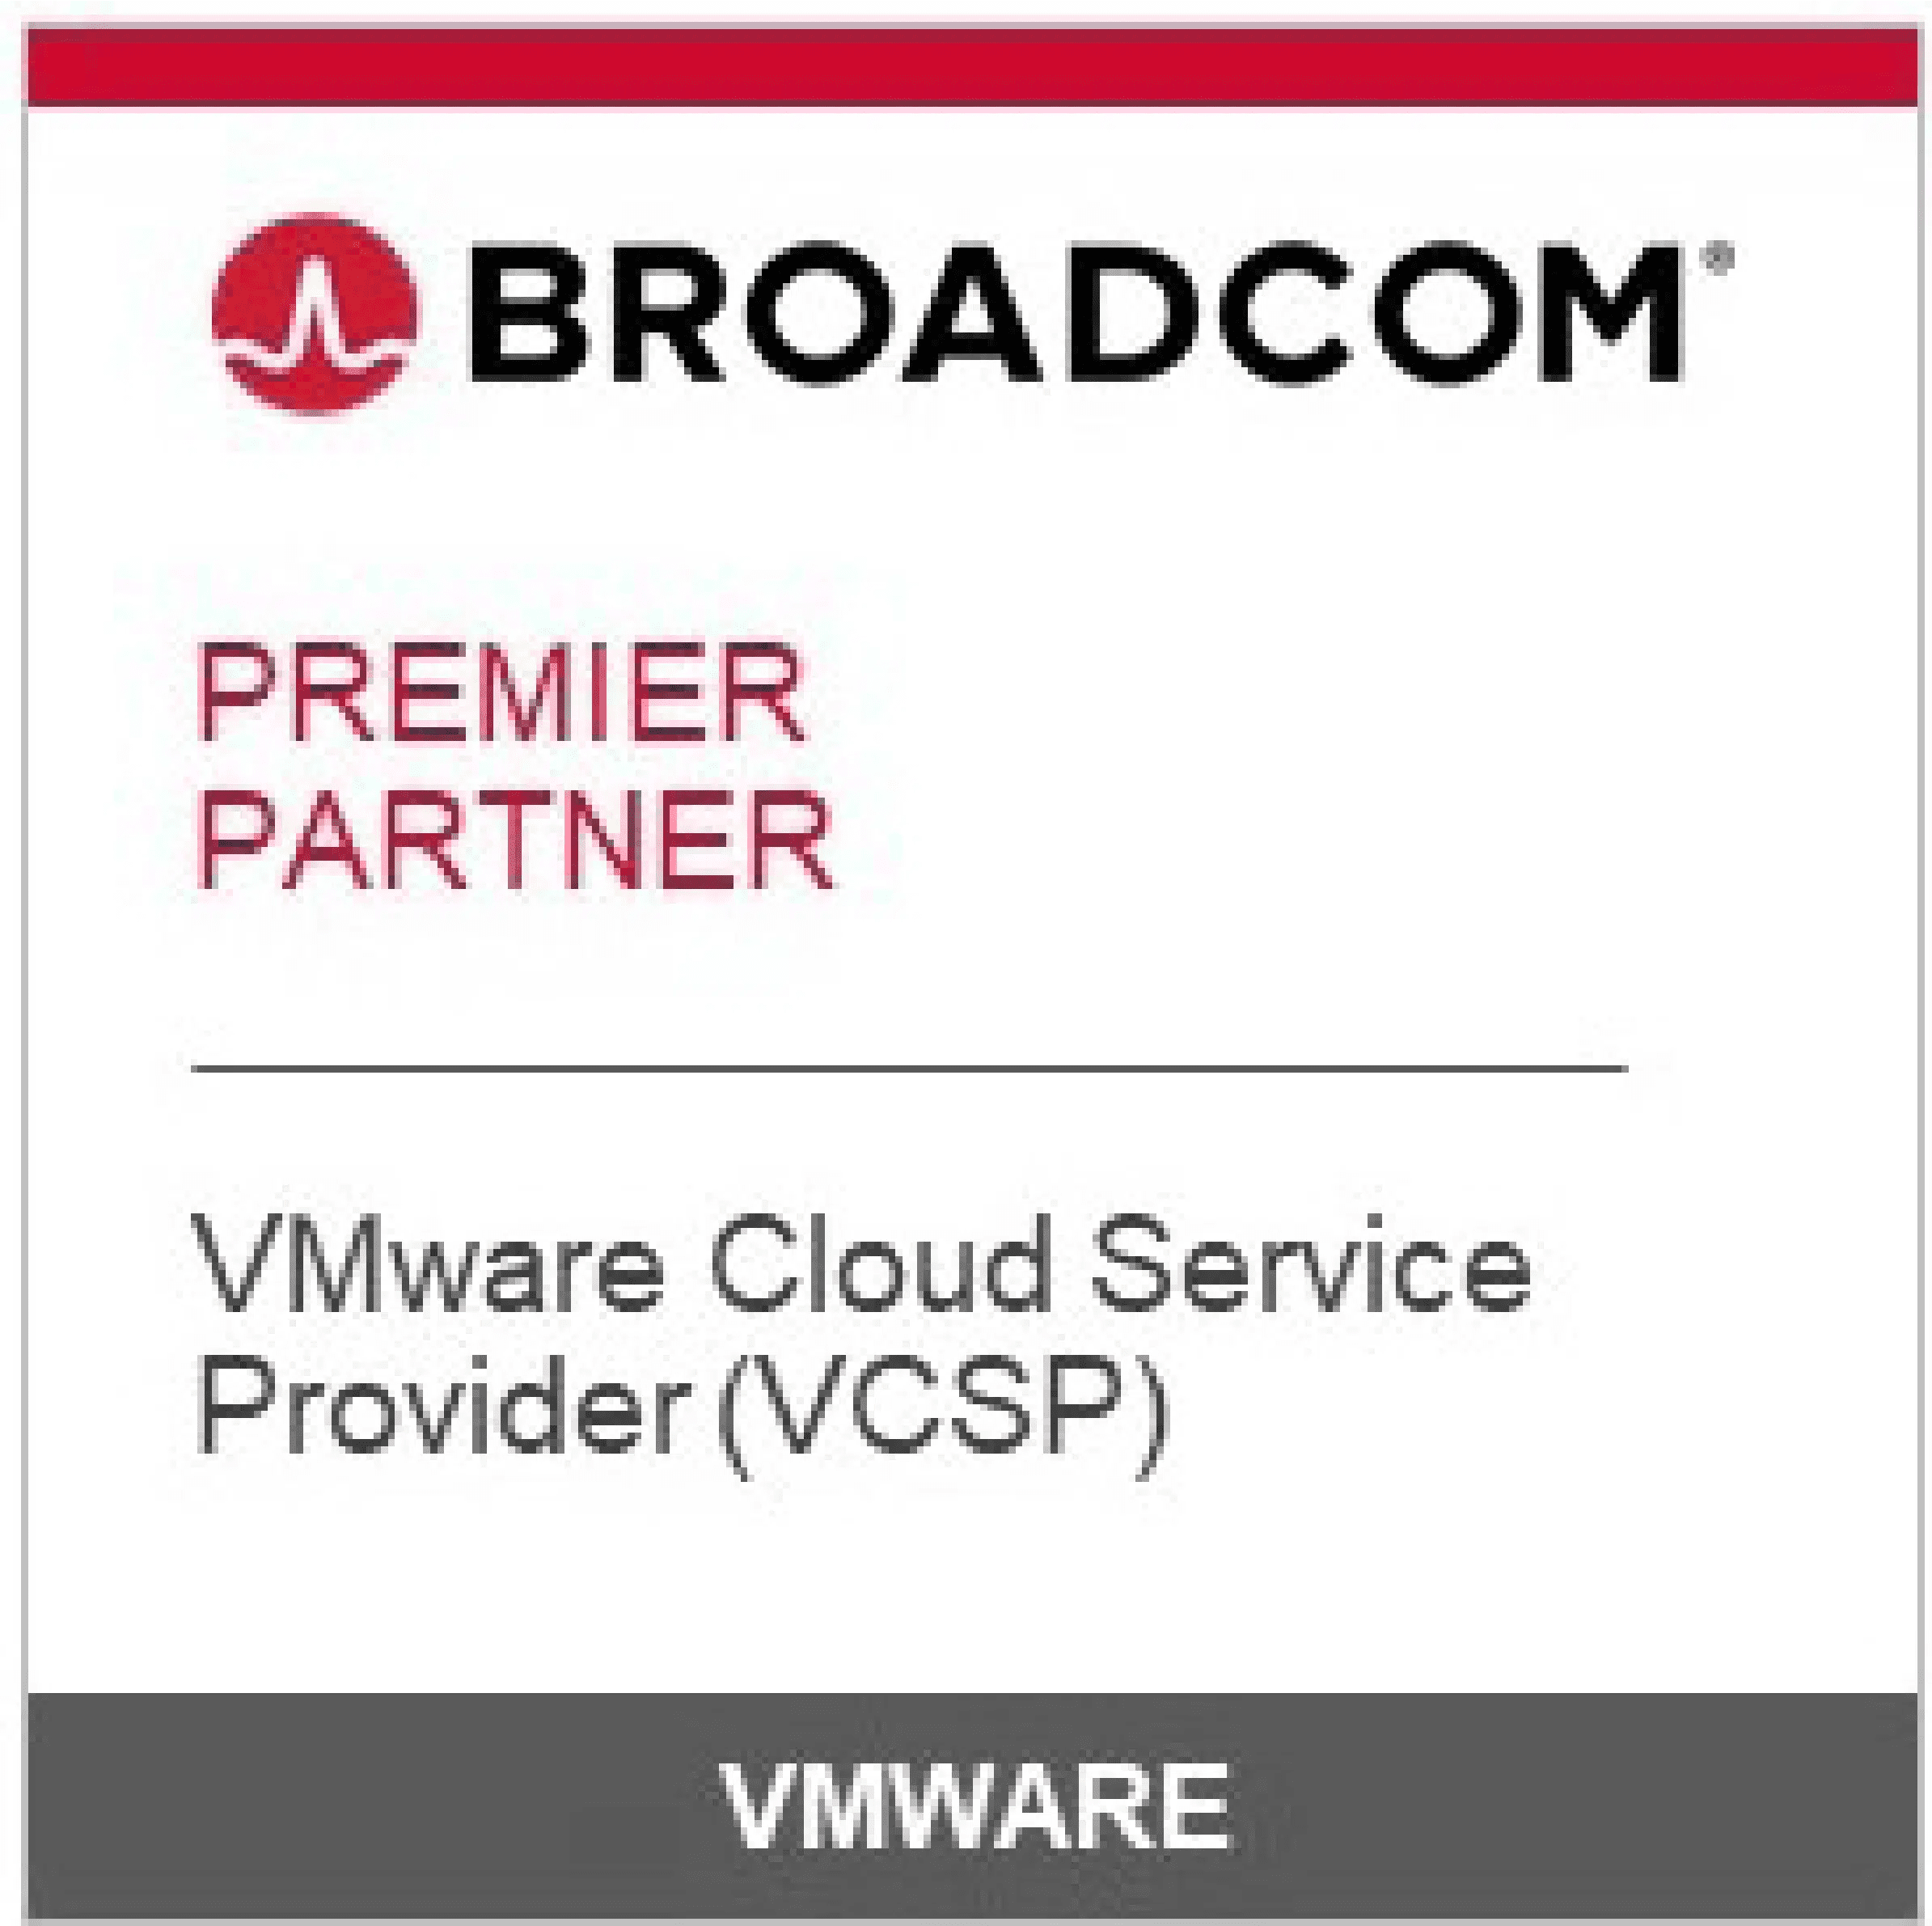 VMware cloud service provider (VCSP)